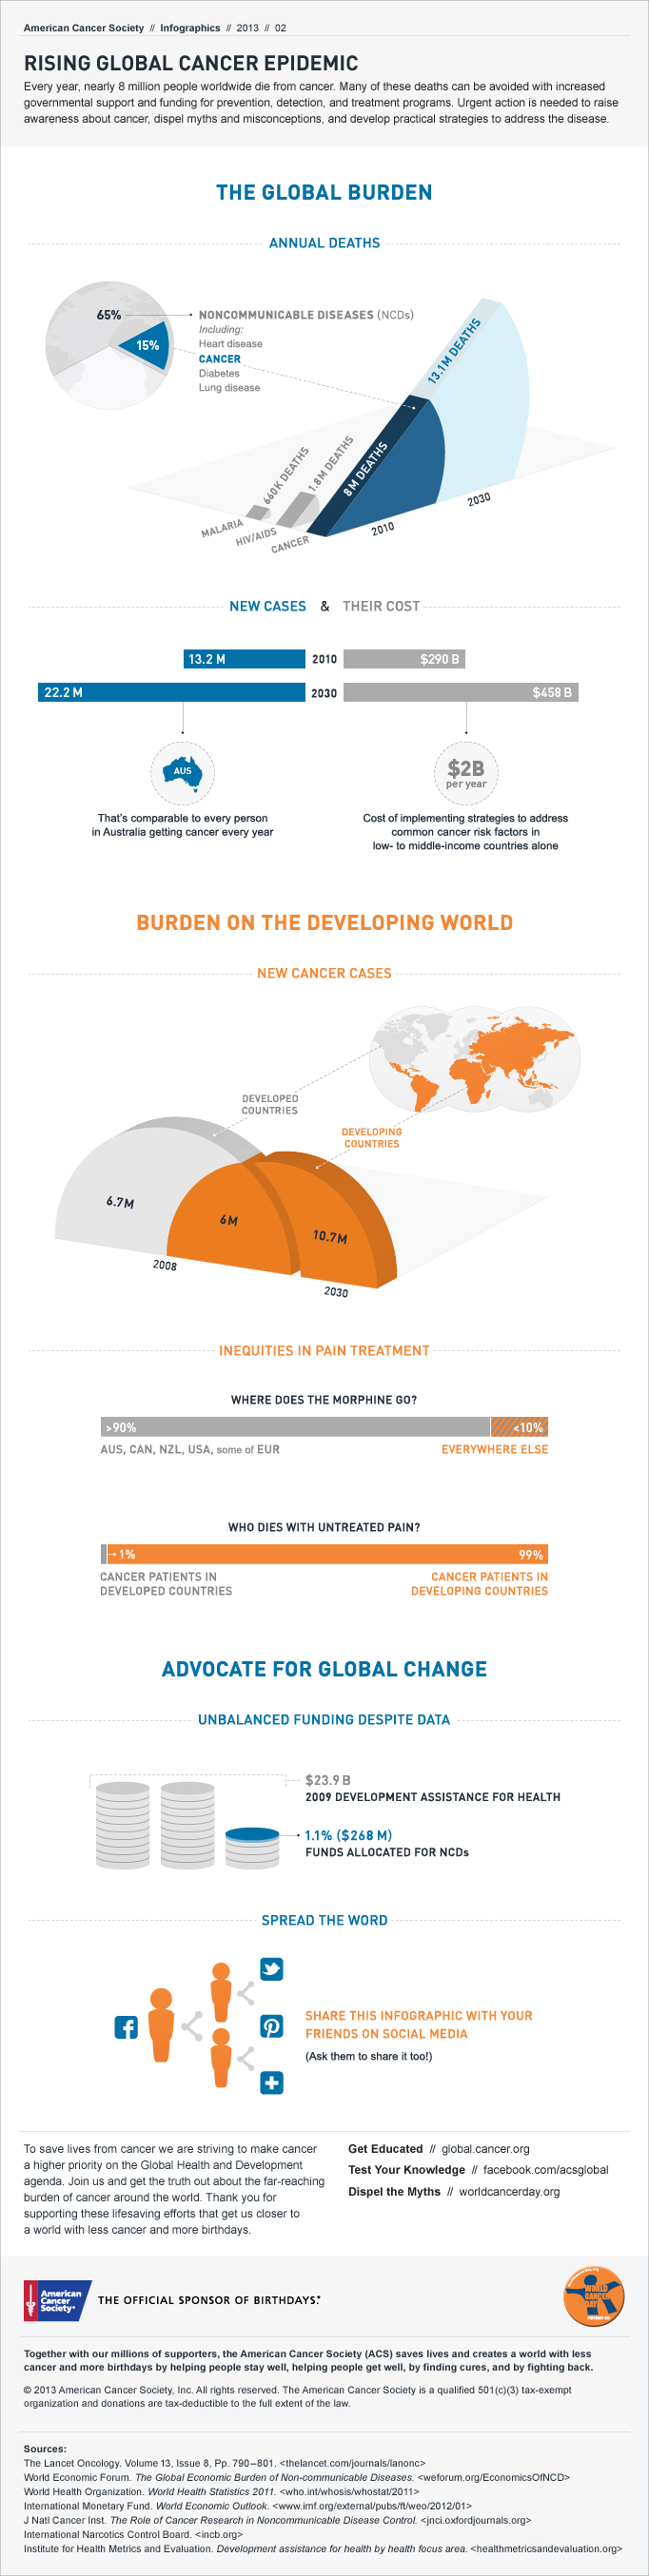 Global Cancer Epidemic Infographic lrg